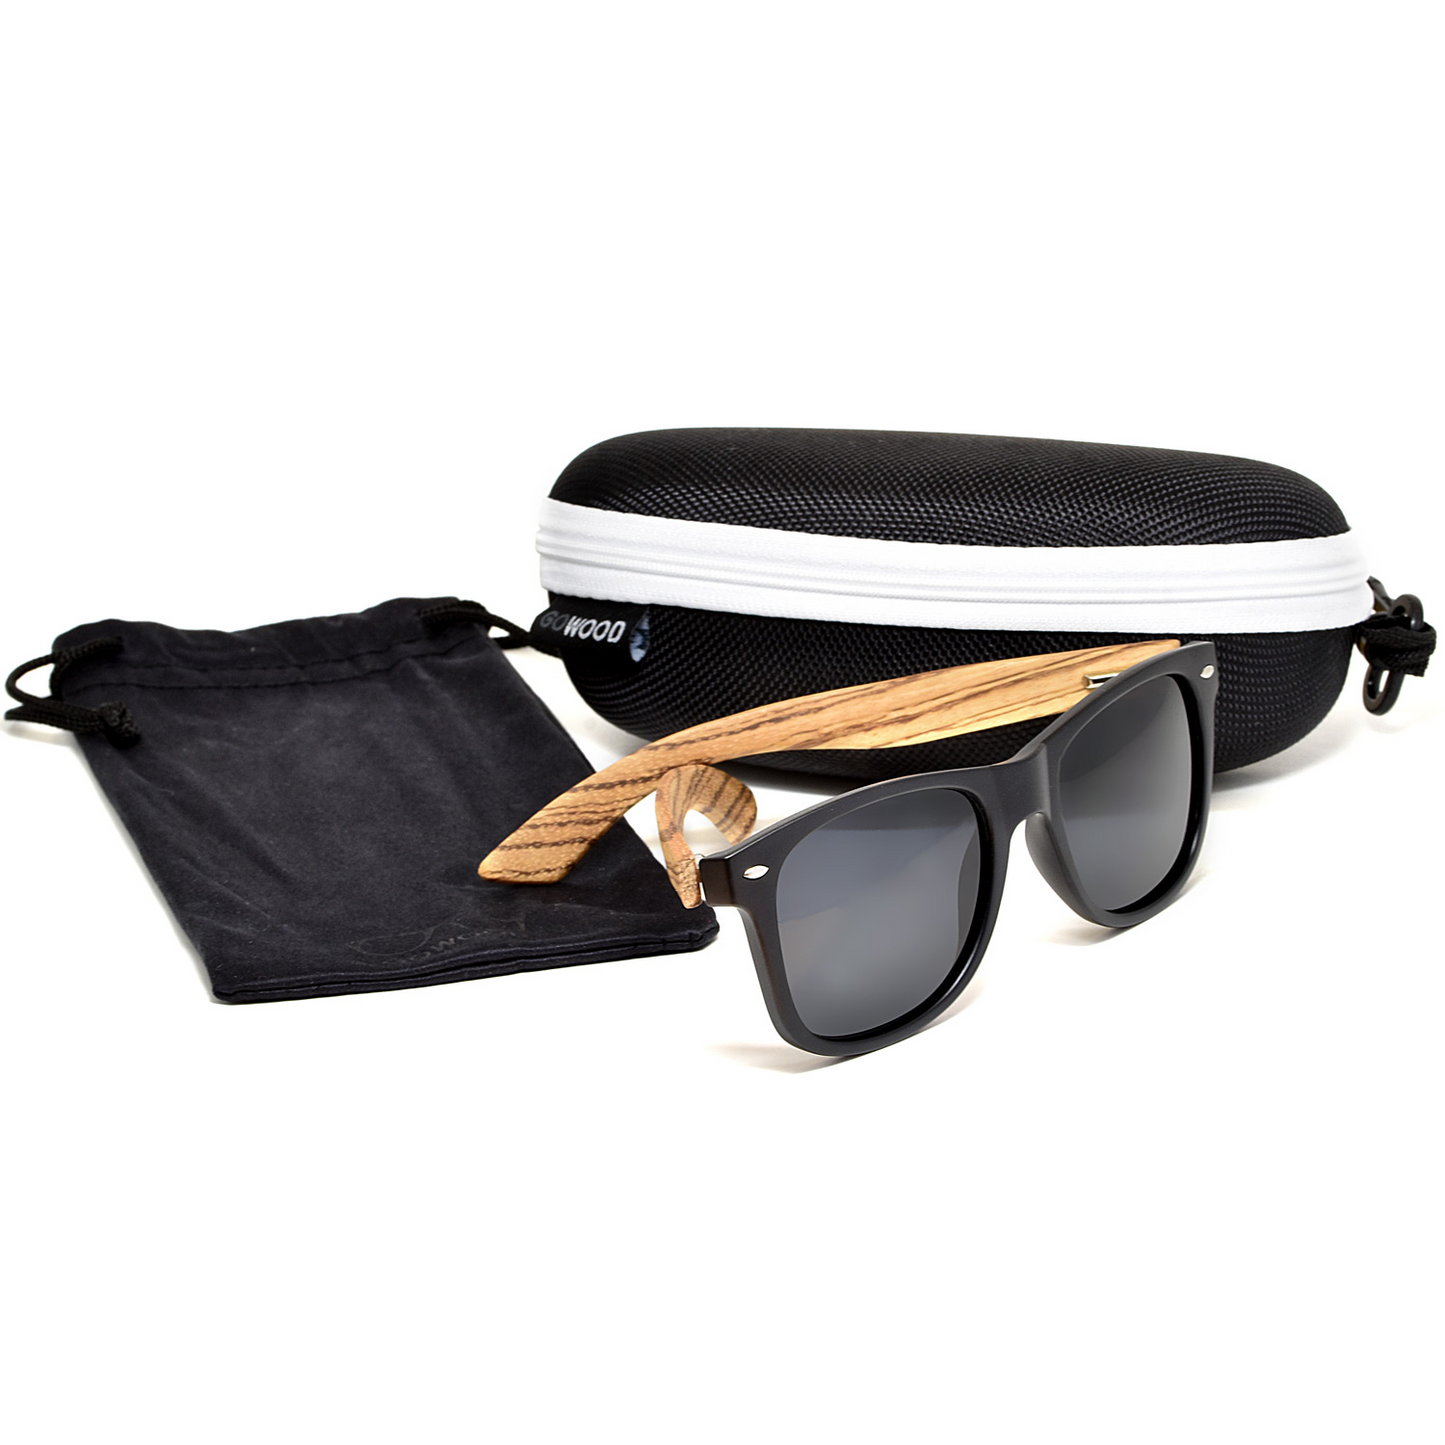 Zebra wood classic style sunglasses with black polarized lenses